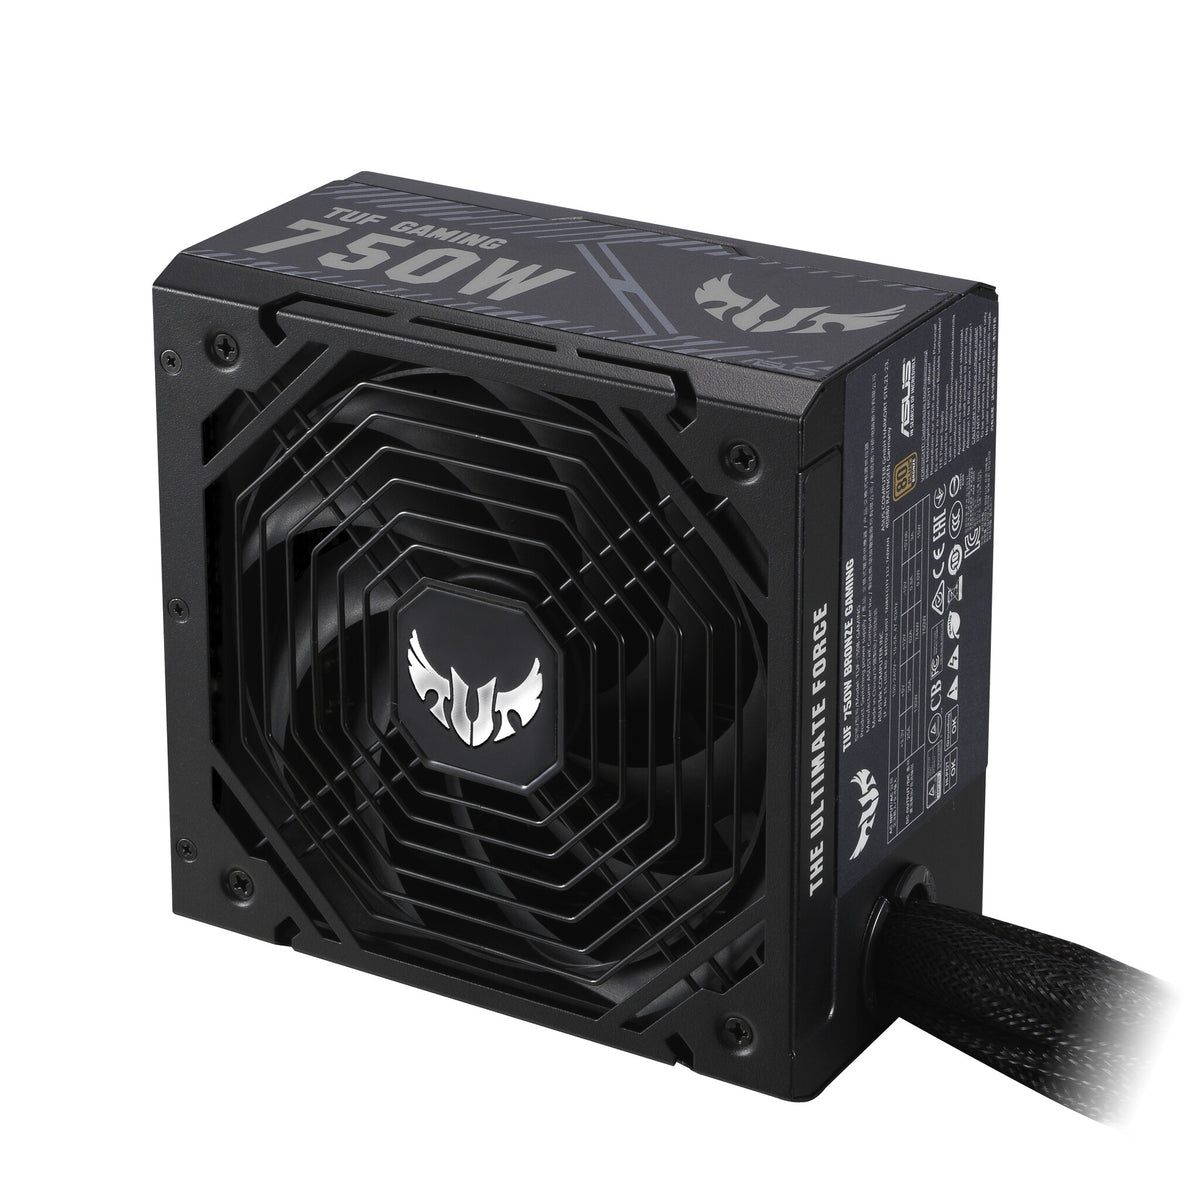 ASUS TUF Gaming - 750W 80+ Gold Non-Modular Power Supply Unit